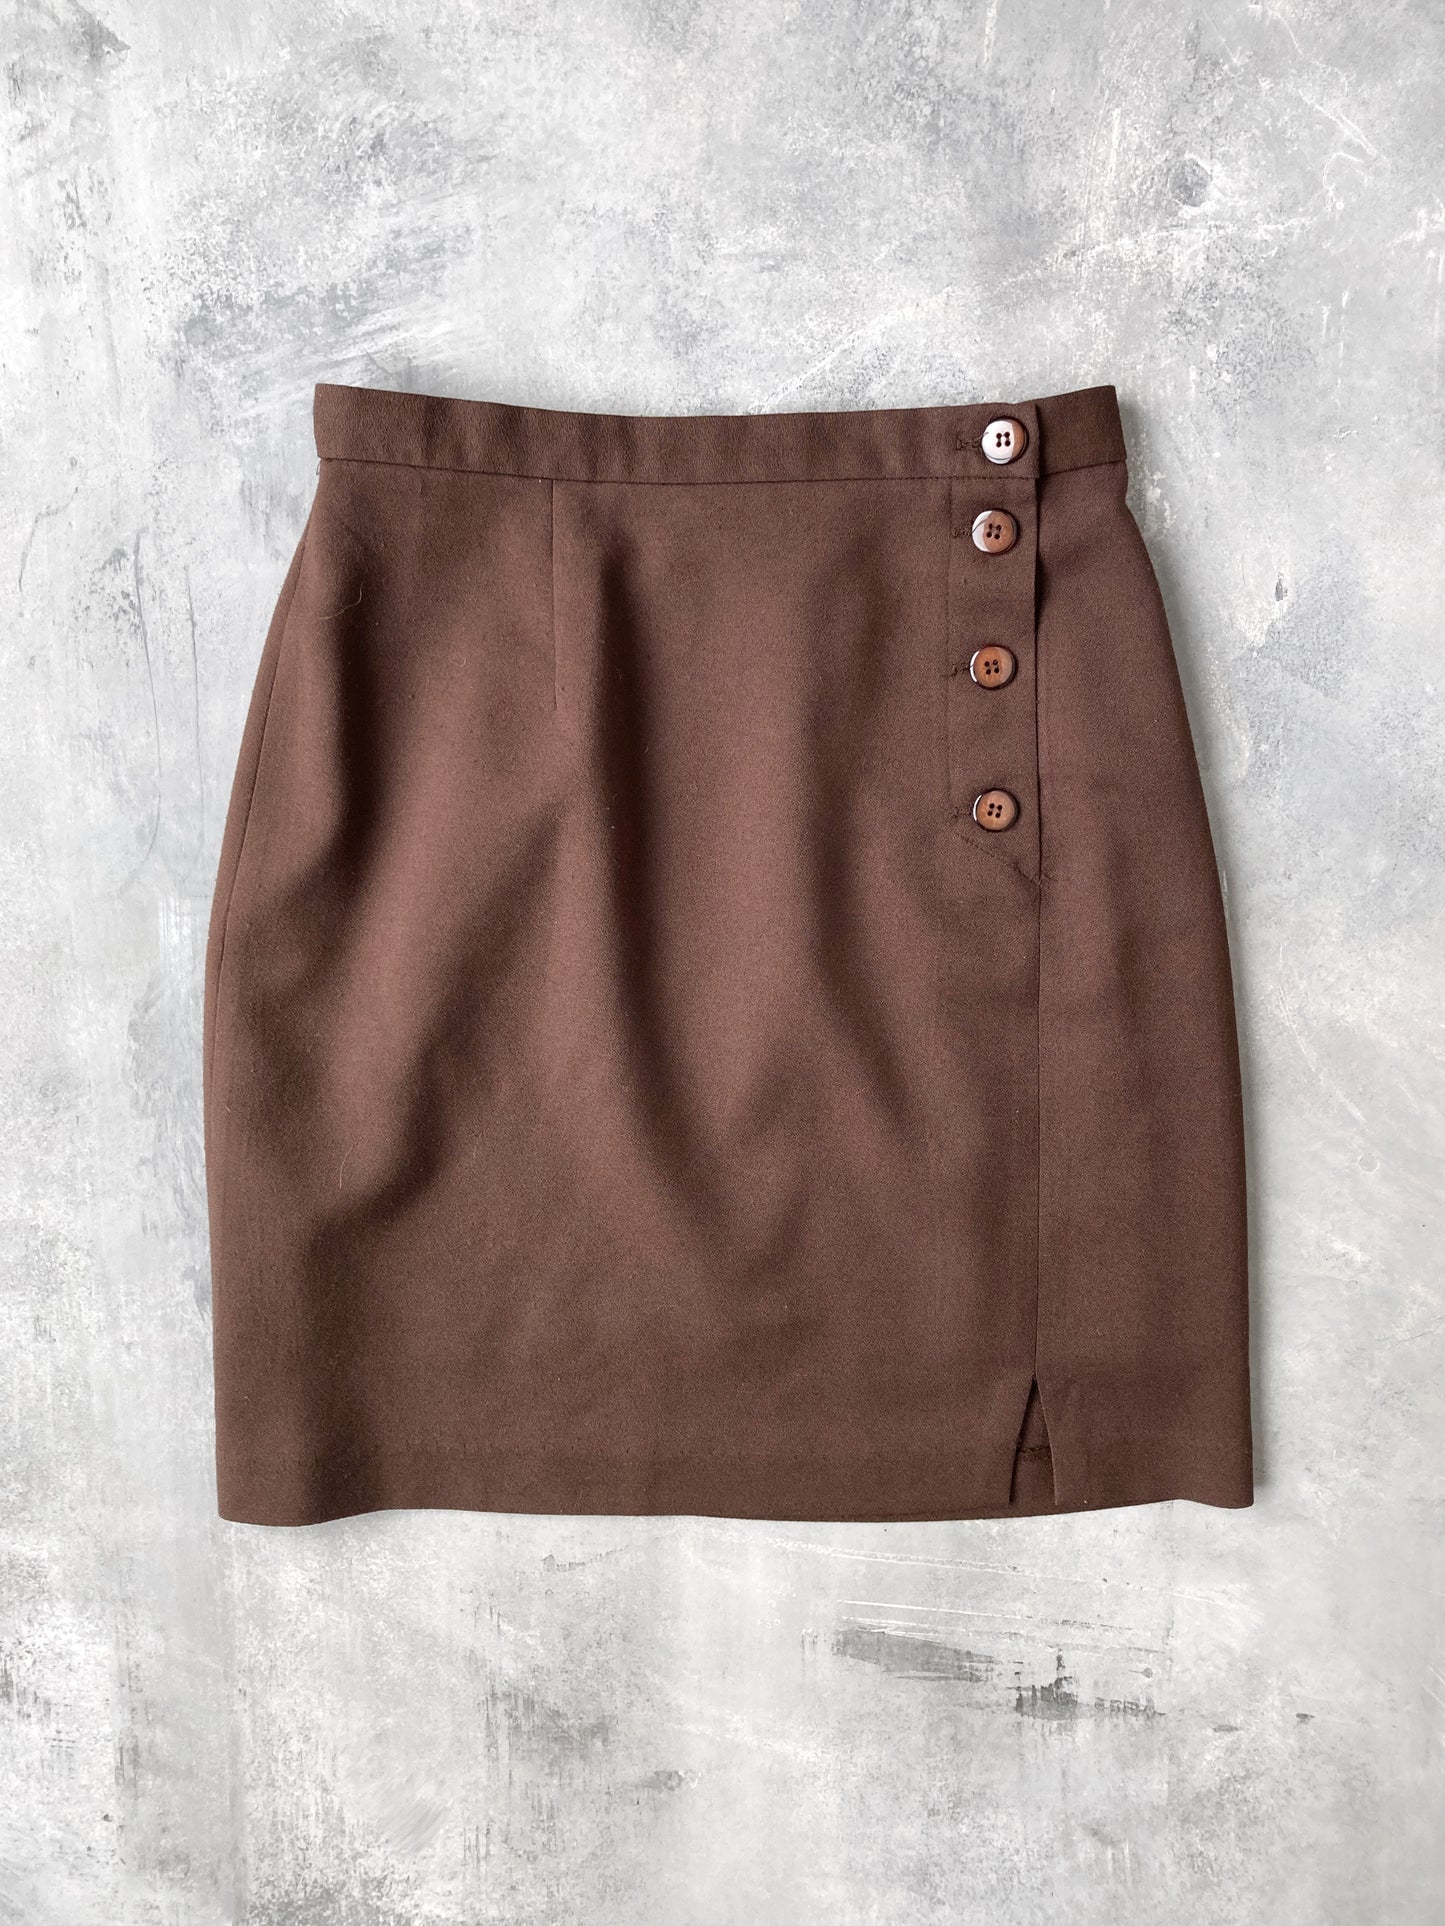 Brown Mini Skirt 70’s - Small (4 - 6)